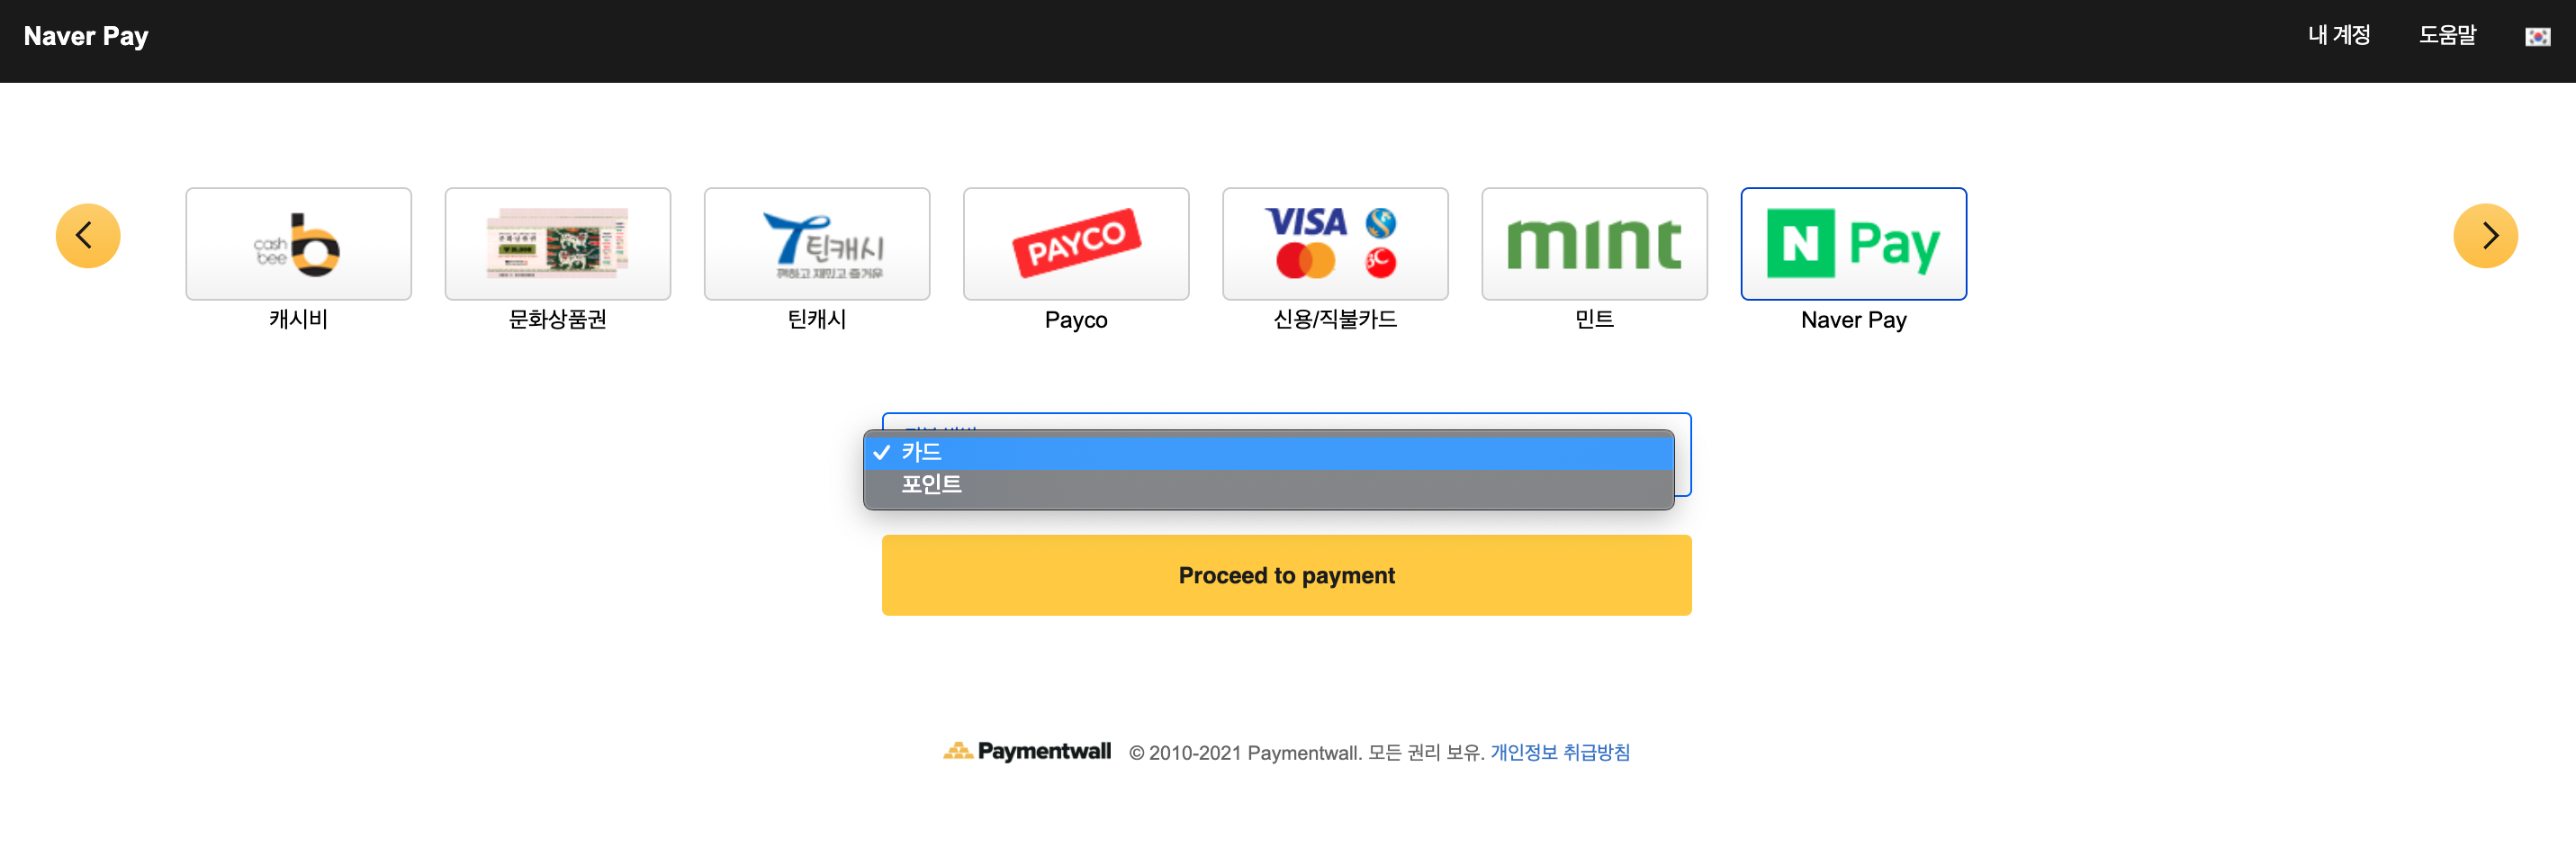 Naver Pay choose options